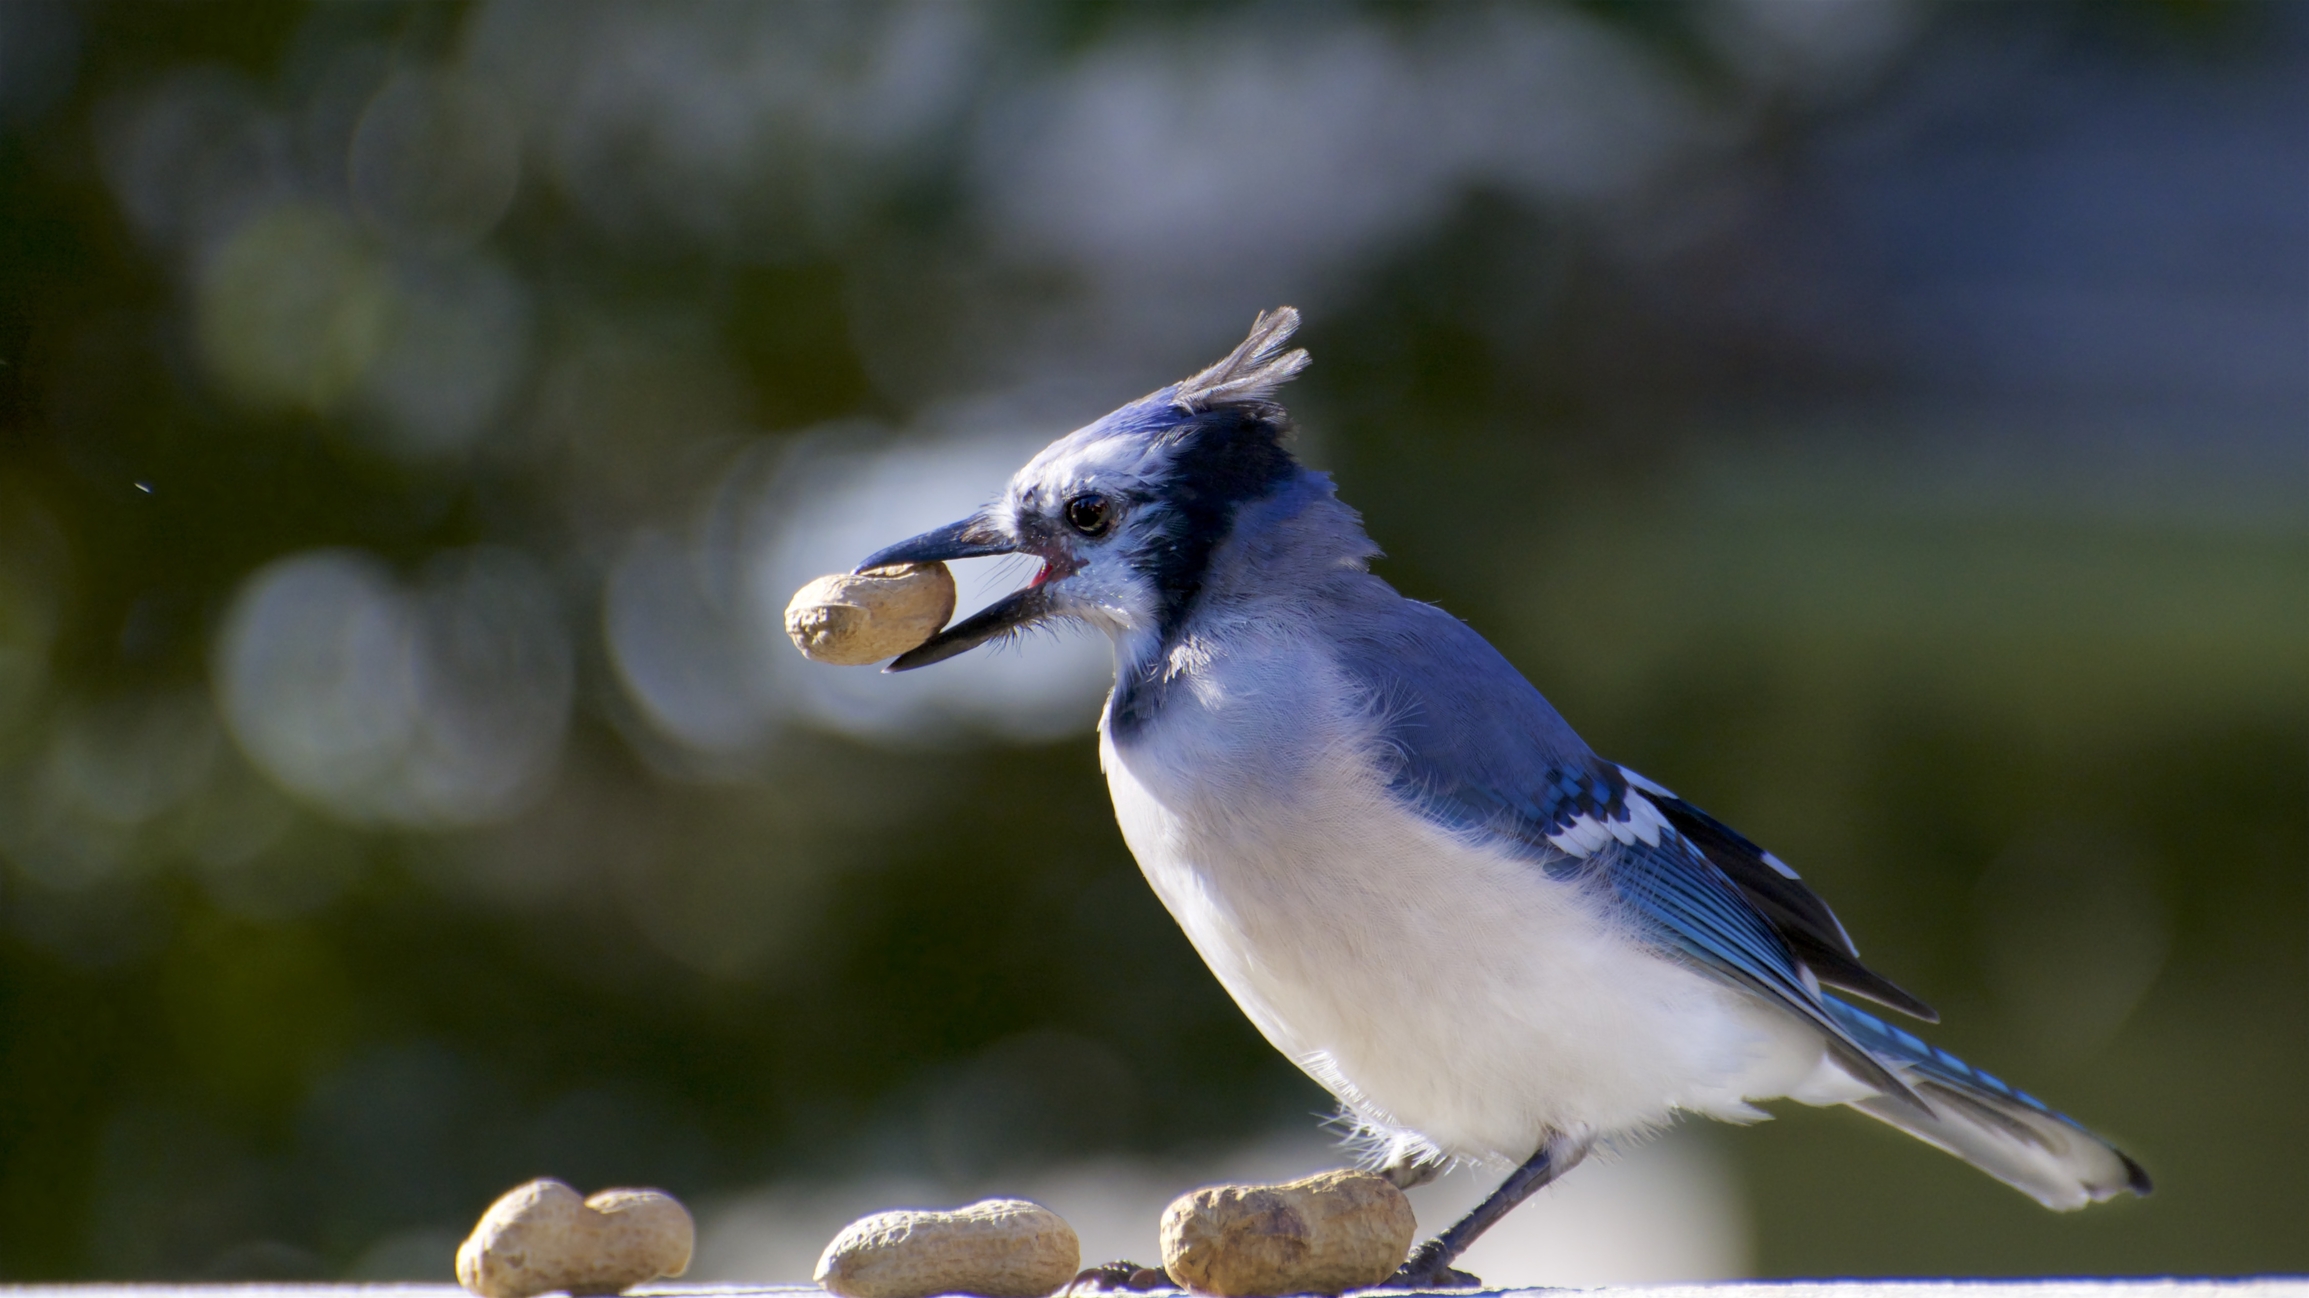 Bird Eating Peanut